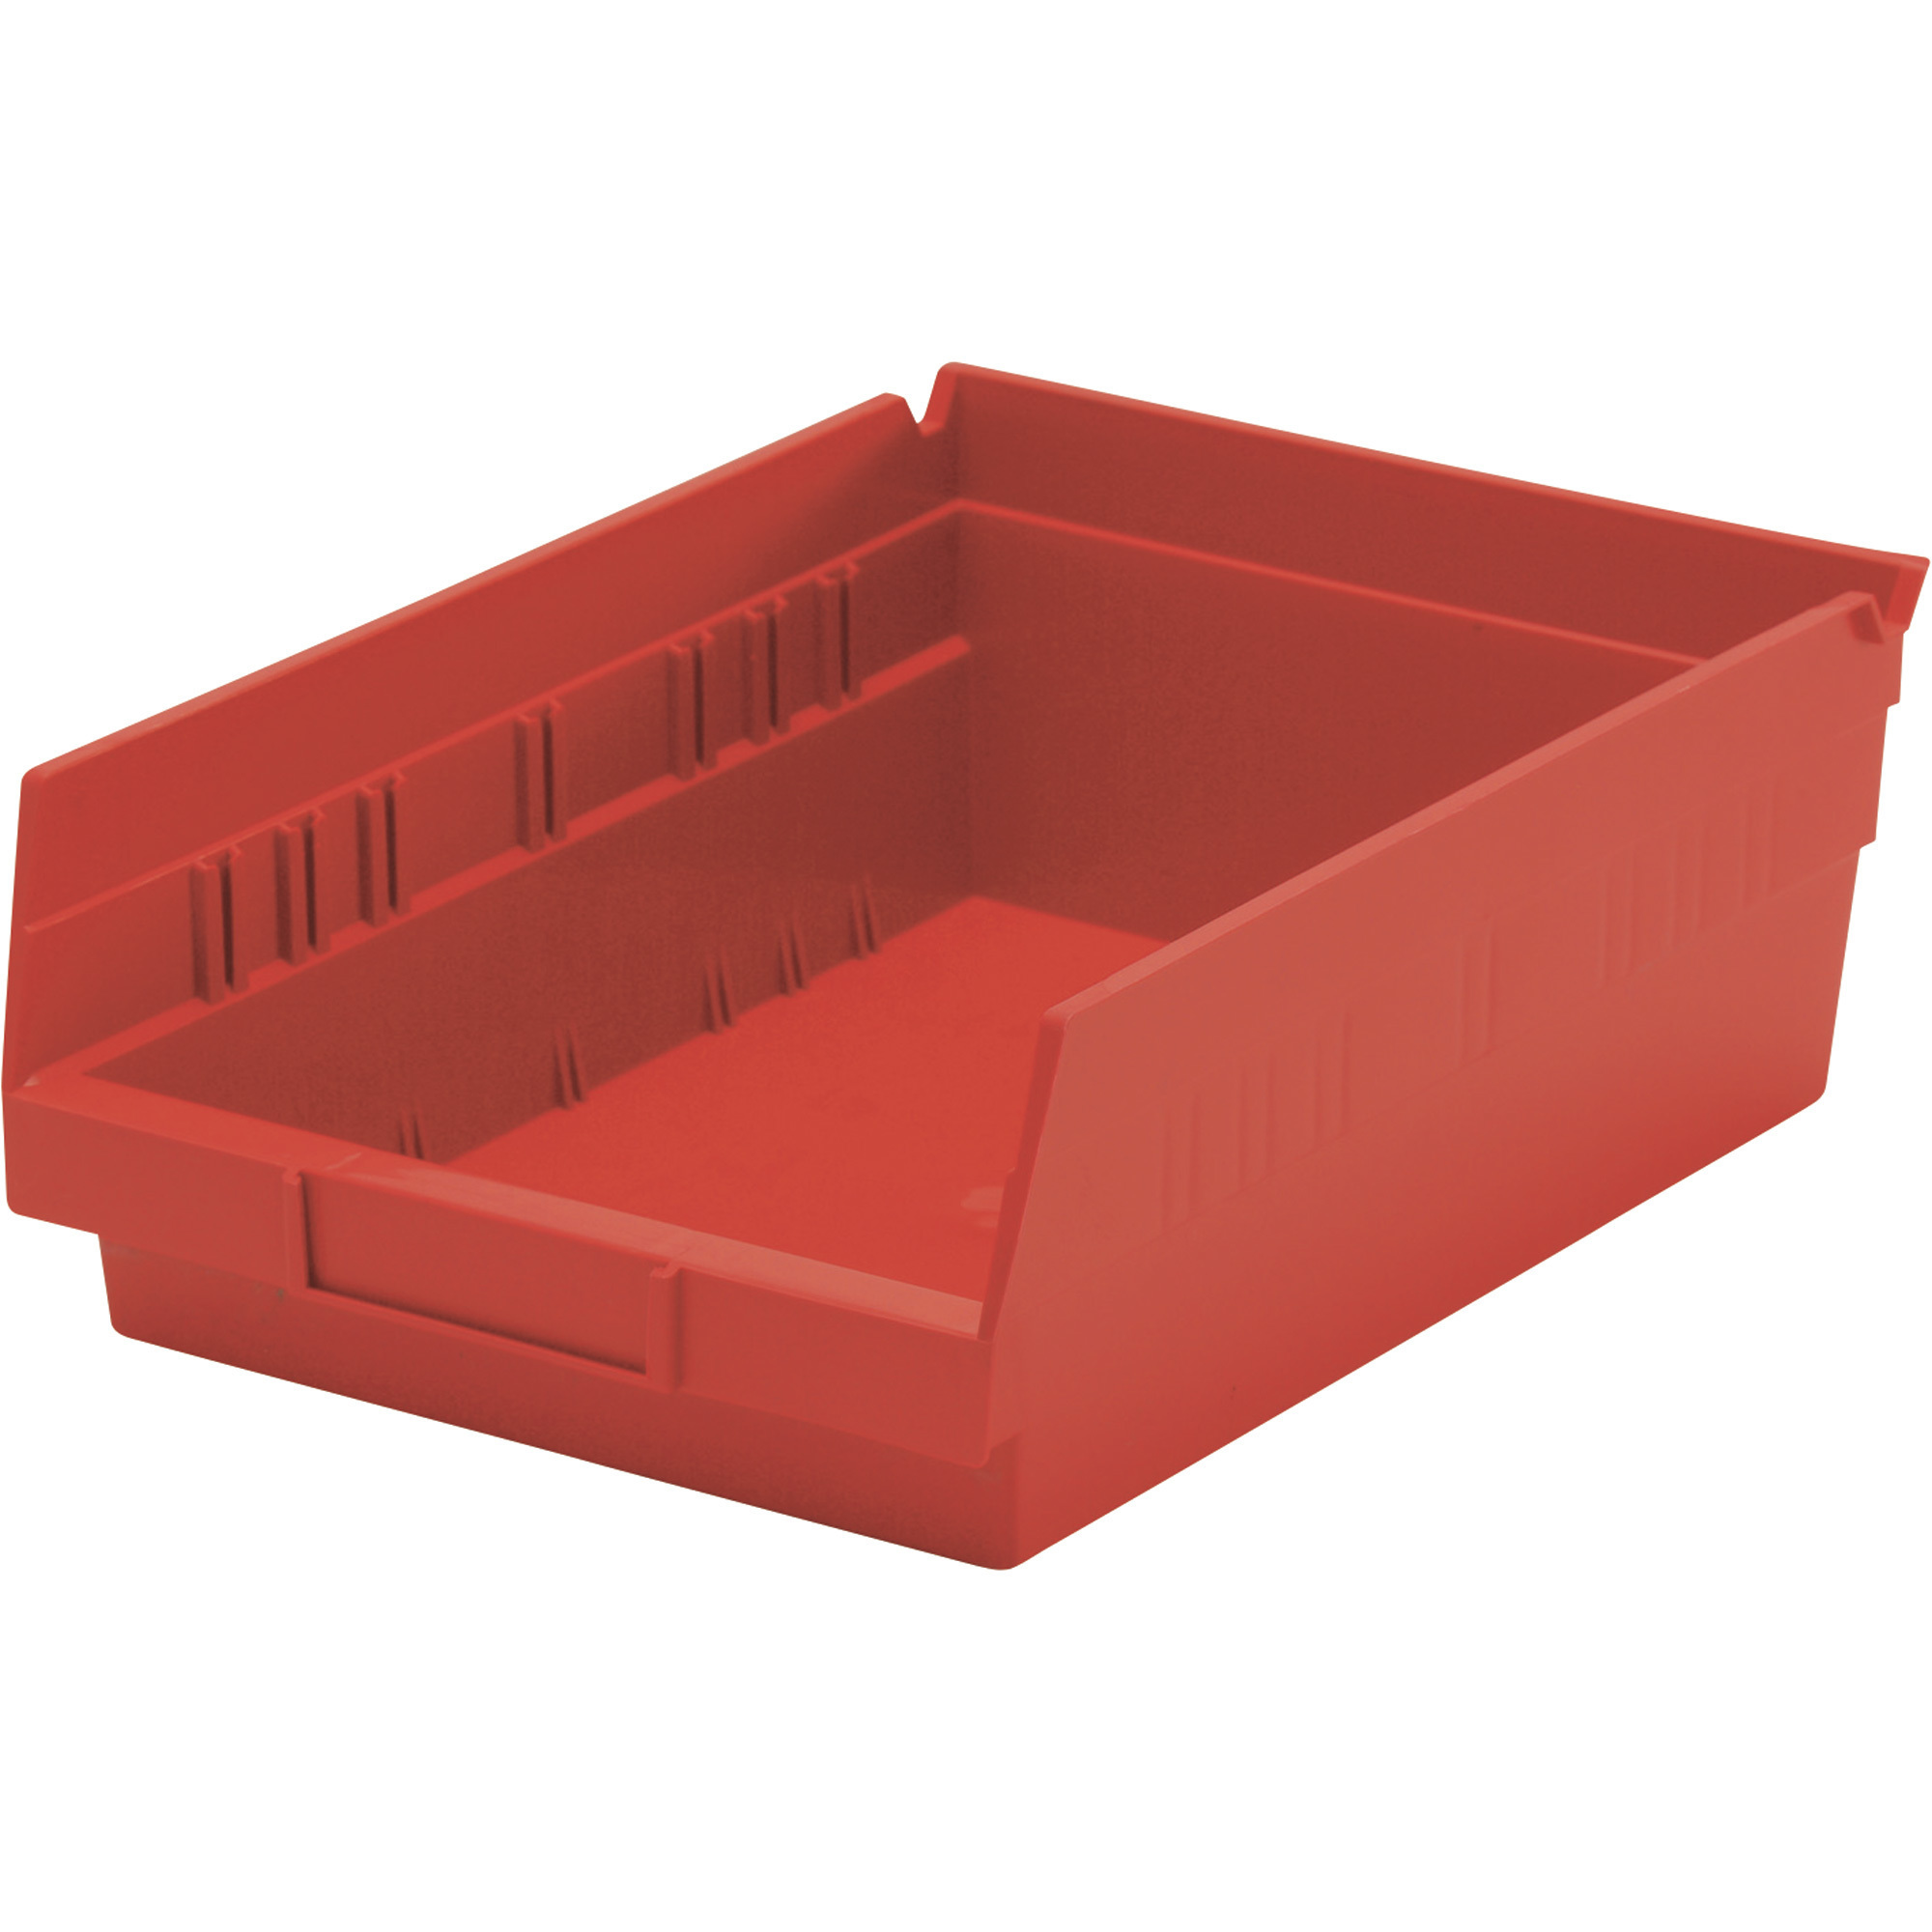 Quantum Storage Economy Shelf Bin, 11 5/8Inch x 8 3/8Inch x 4Inch Size, Red, Carton of 20, Model QSB107RDCS